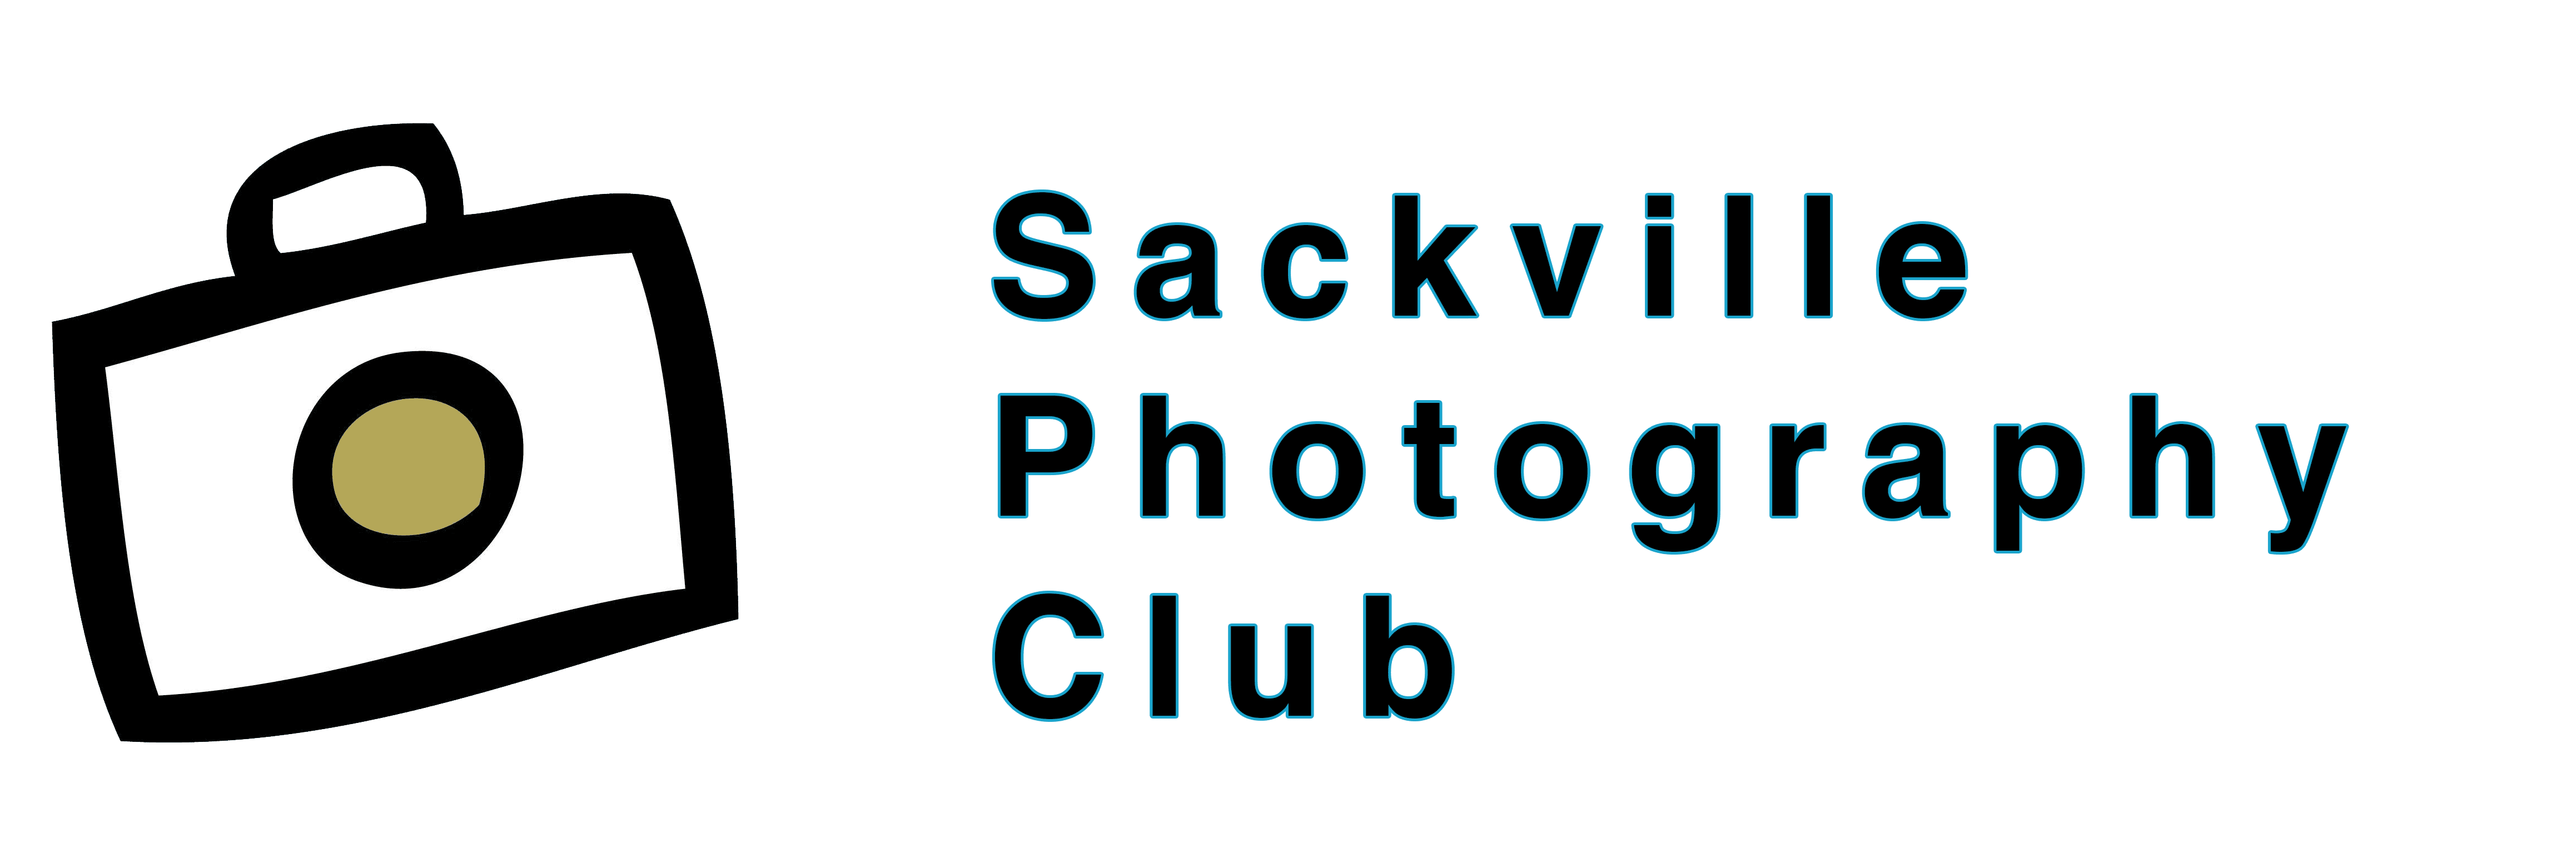 Sackville Photography Club